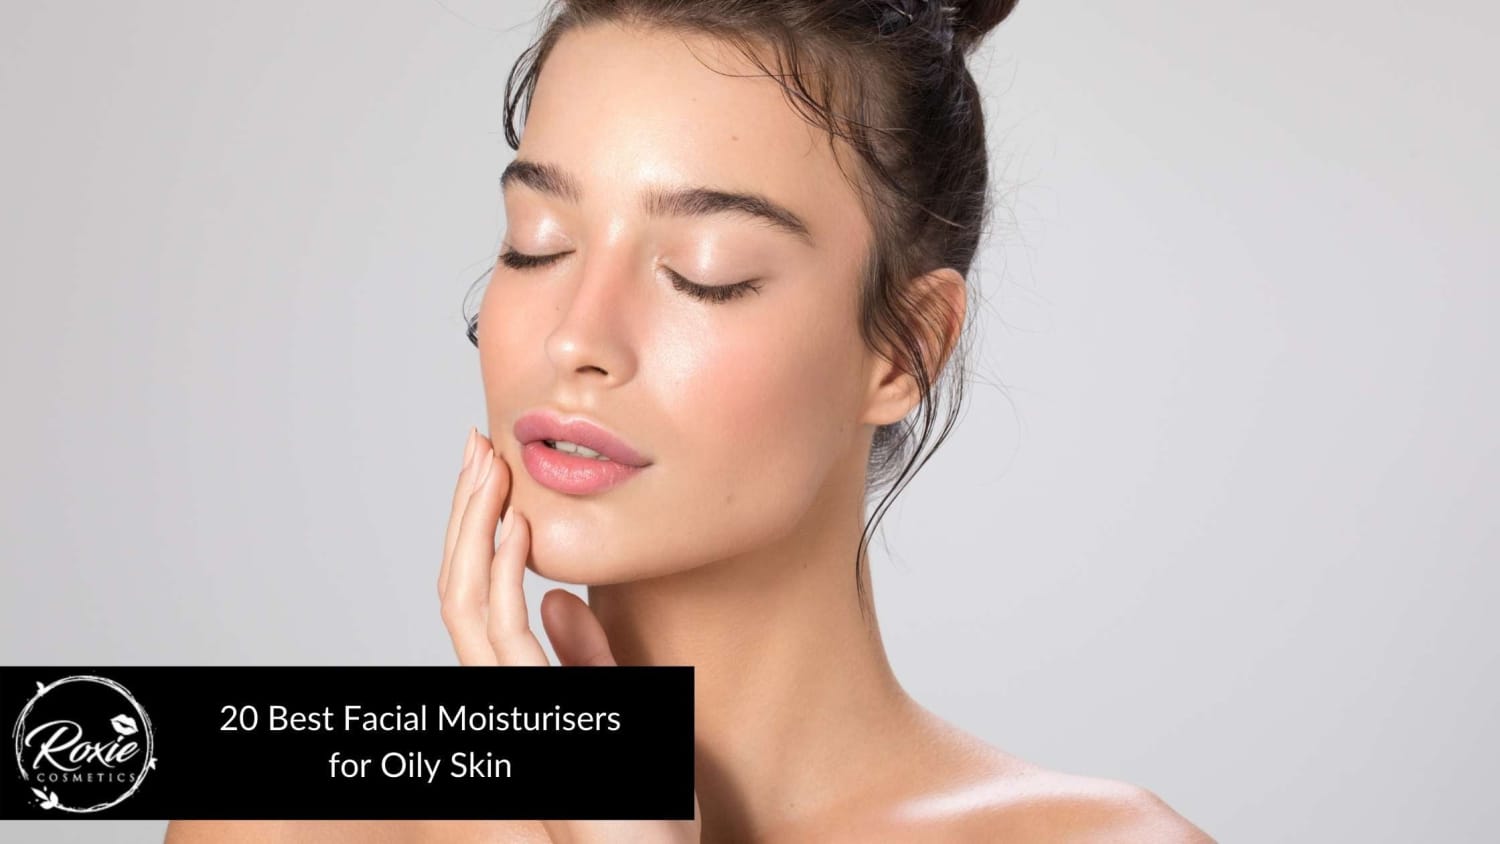 19 Best Facial Moisturisers for Oily Skin